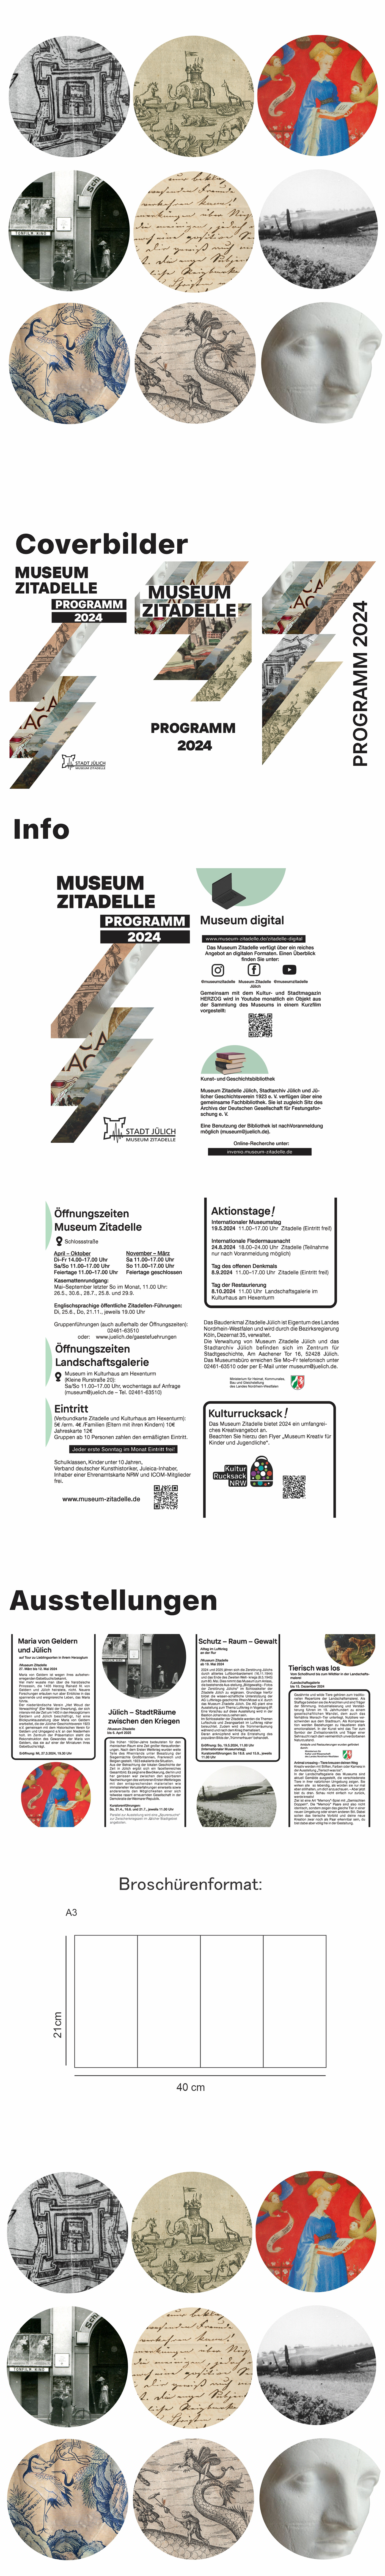 broschure brochure design graphic design  infographic Mediengestaltung marketing   programa museum Museum Design